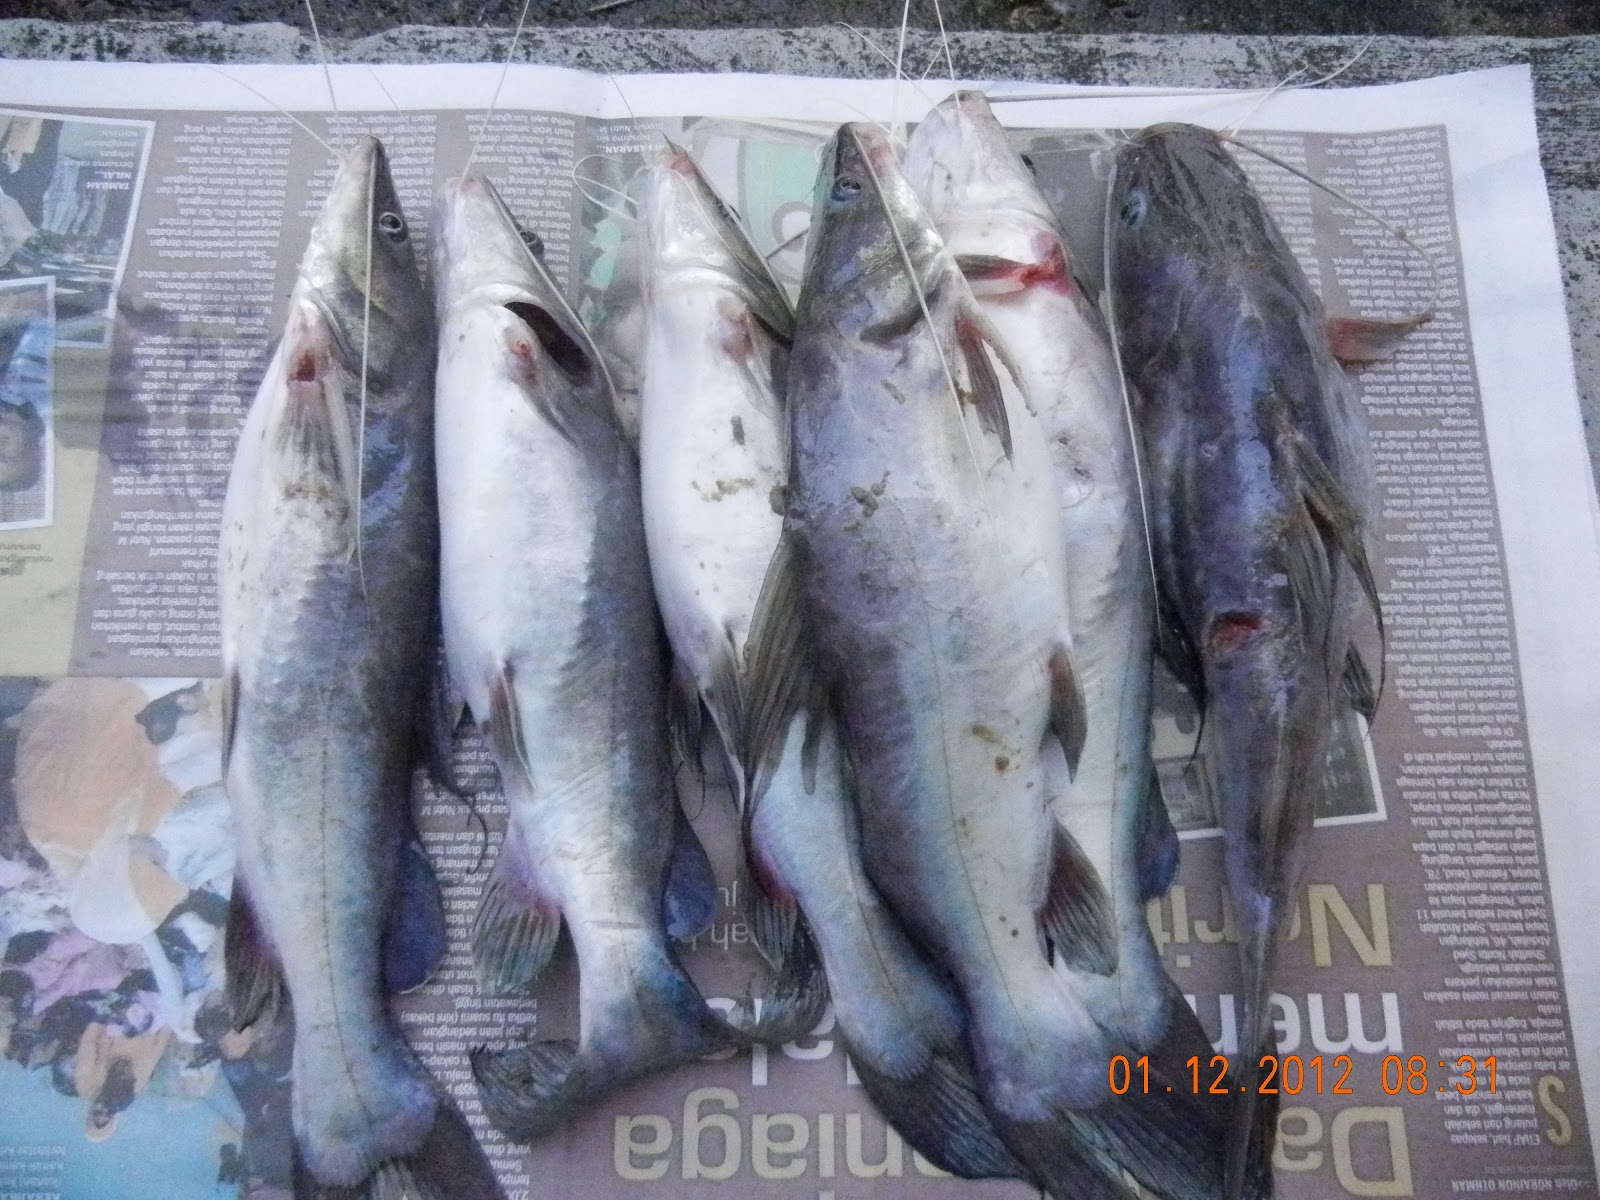 Ikan Baung Masak Tempoyak / Resepi Ikan Baung Masak Tempoyak Pahang